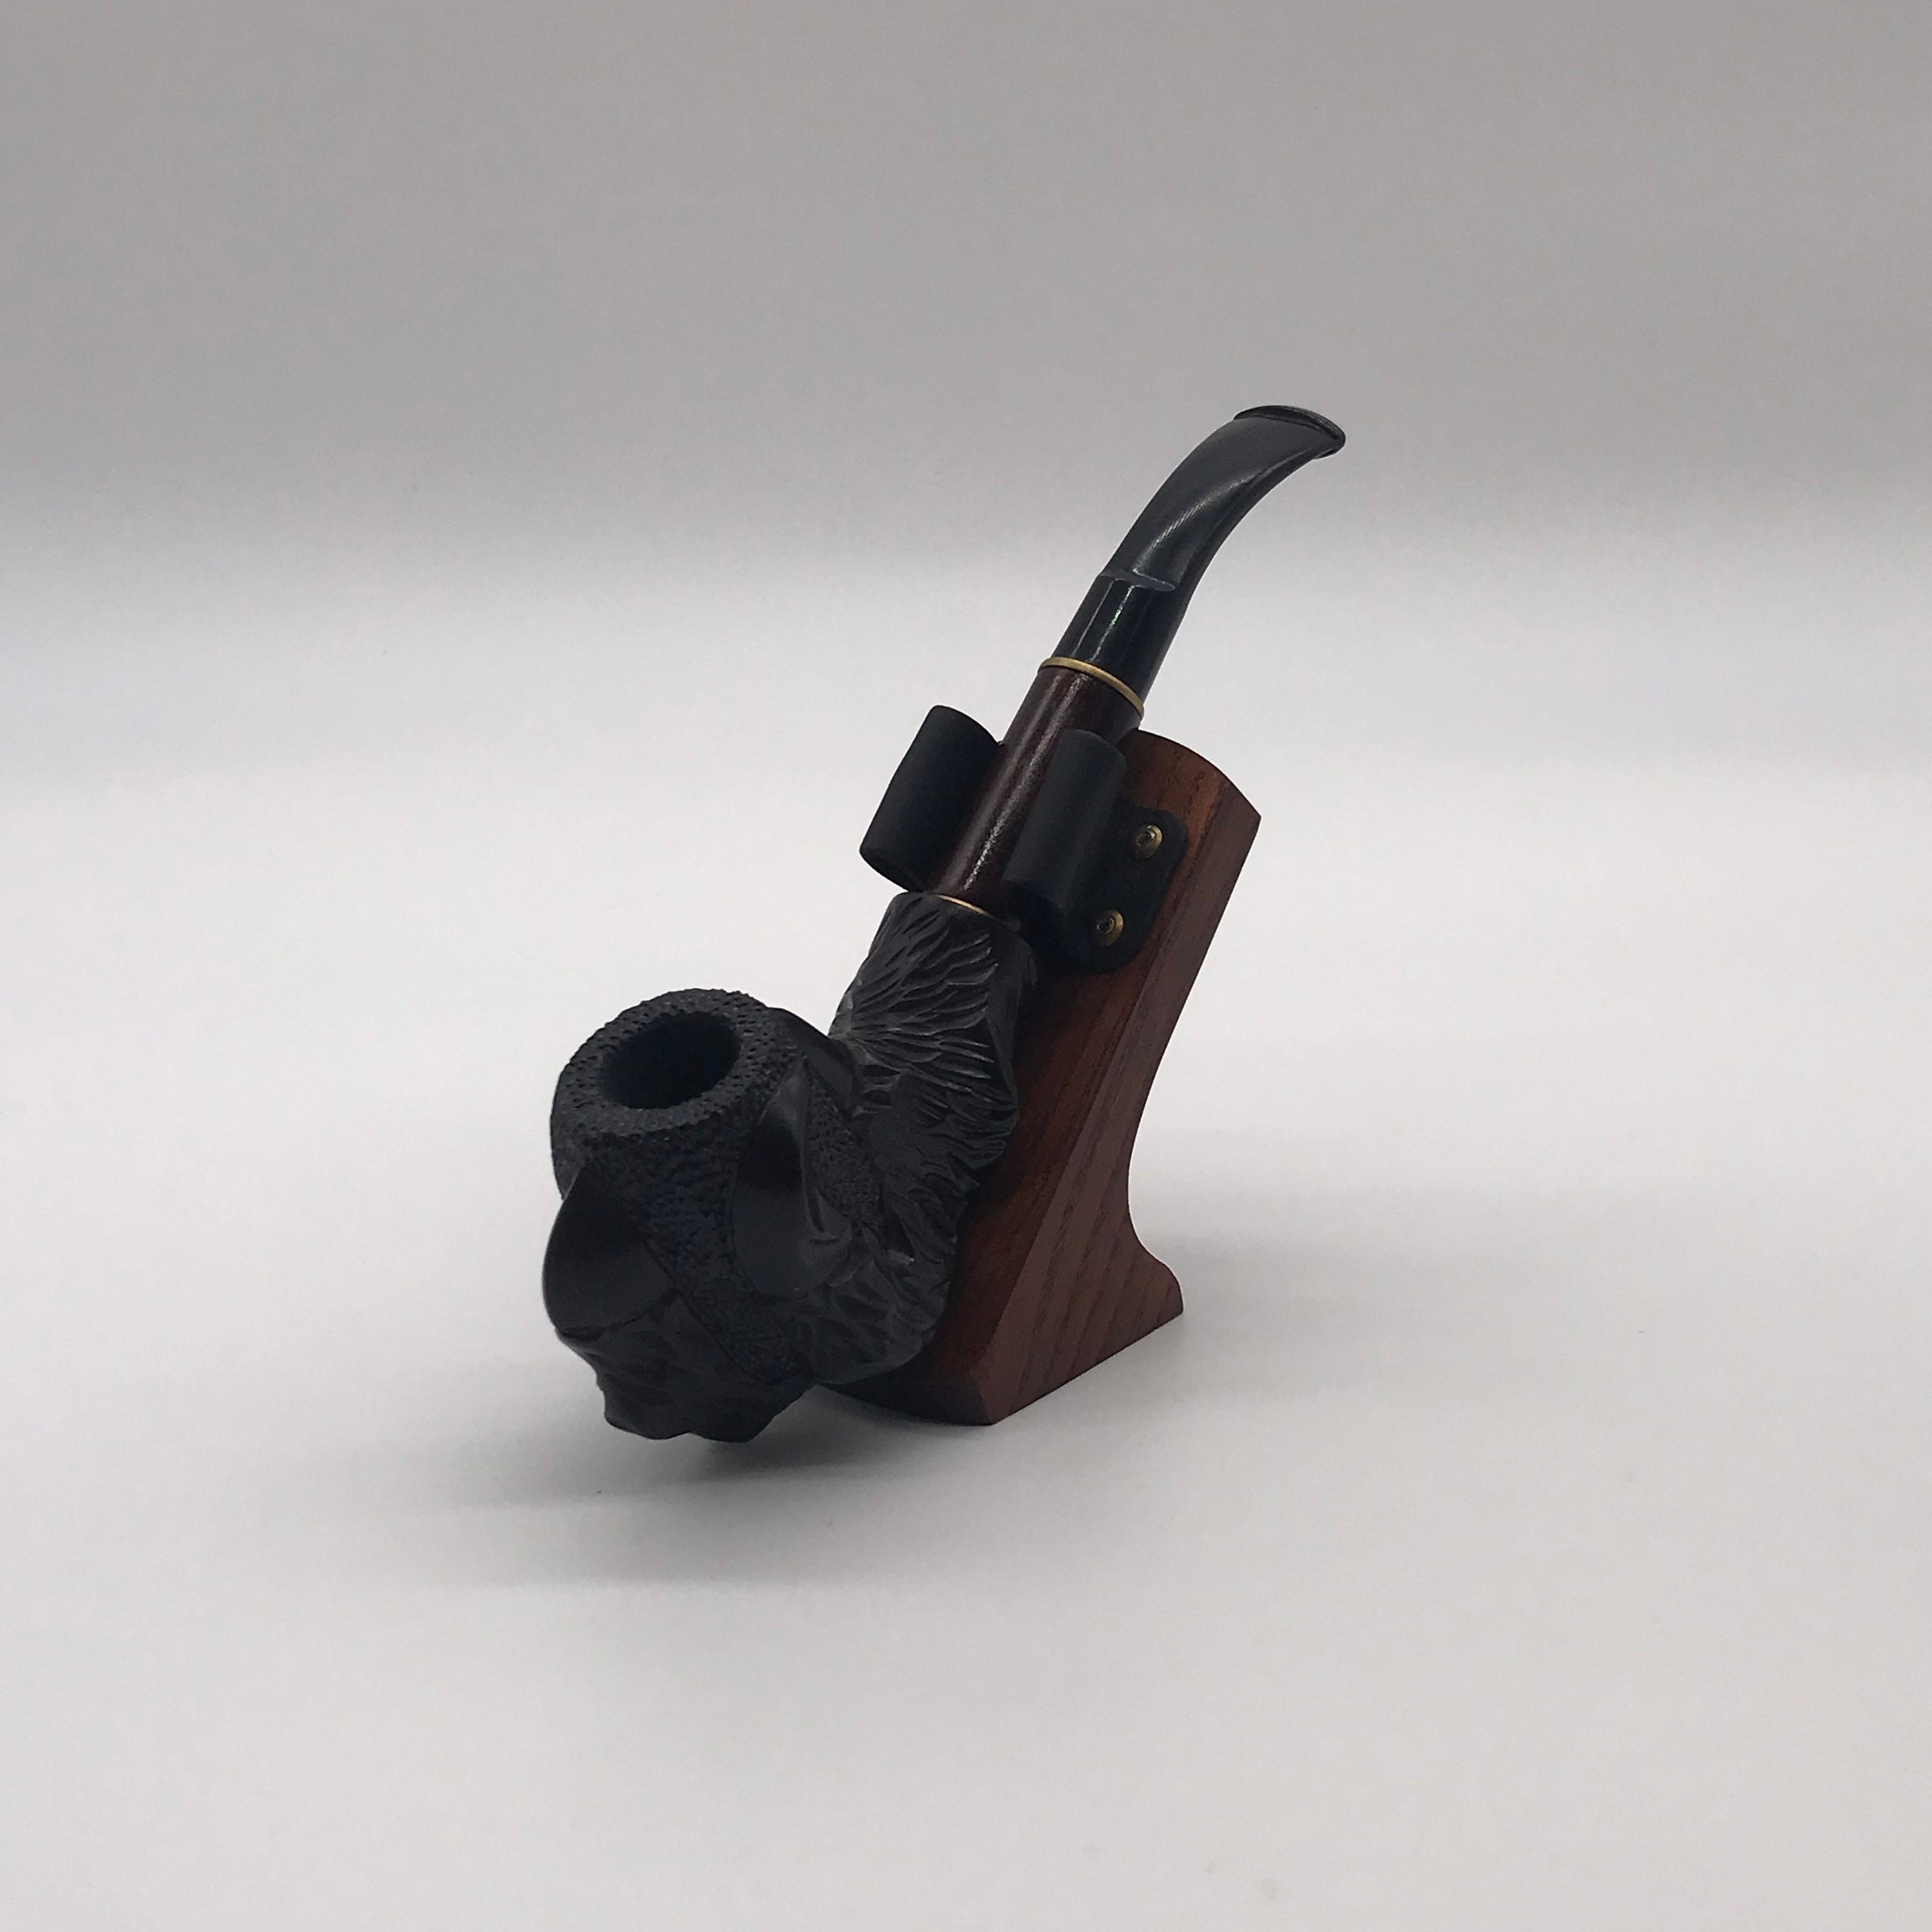  Mini Handmade Tobacco Smoking Pipe - Model Suzi